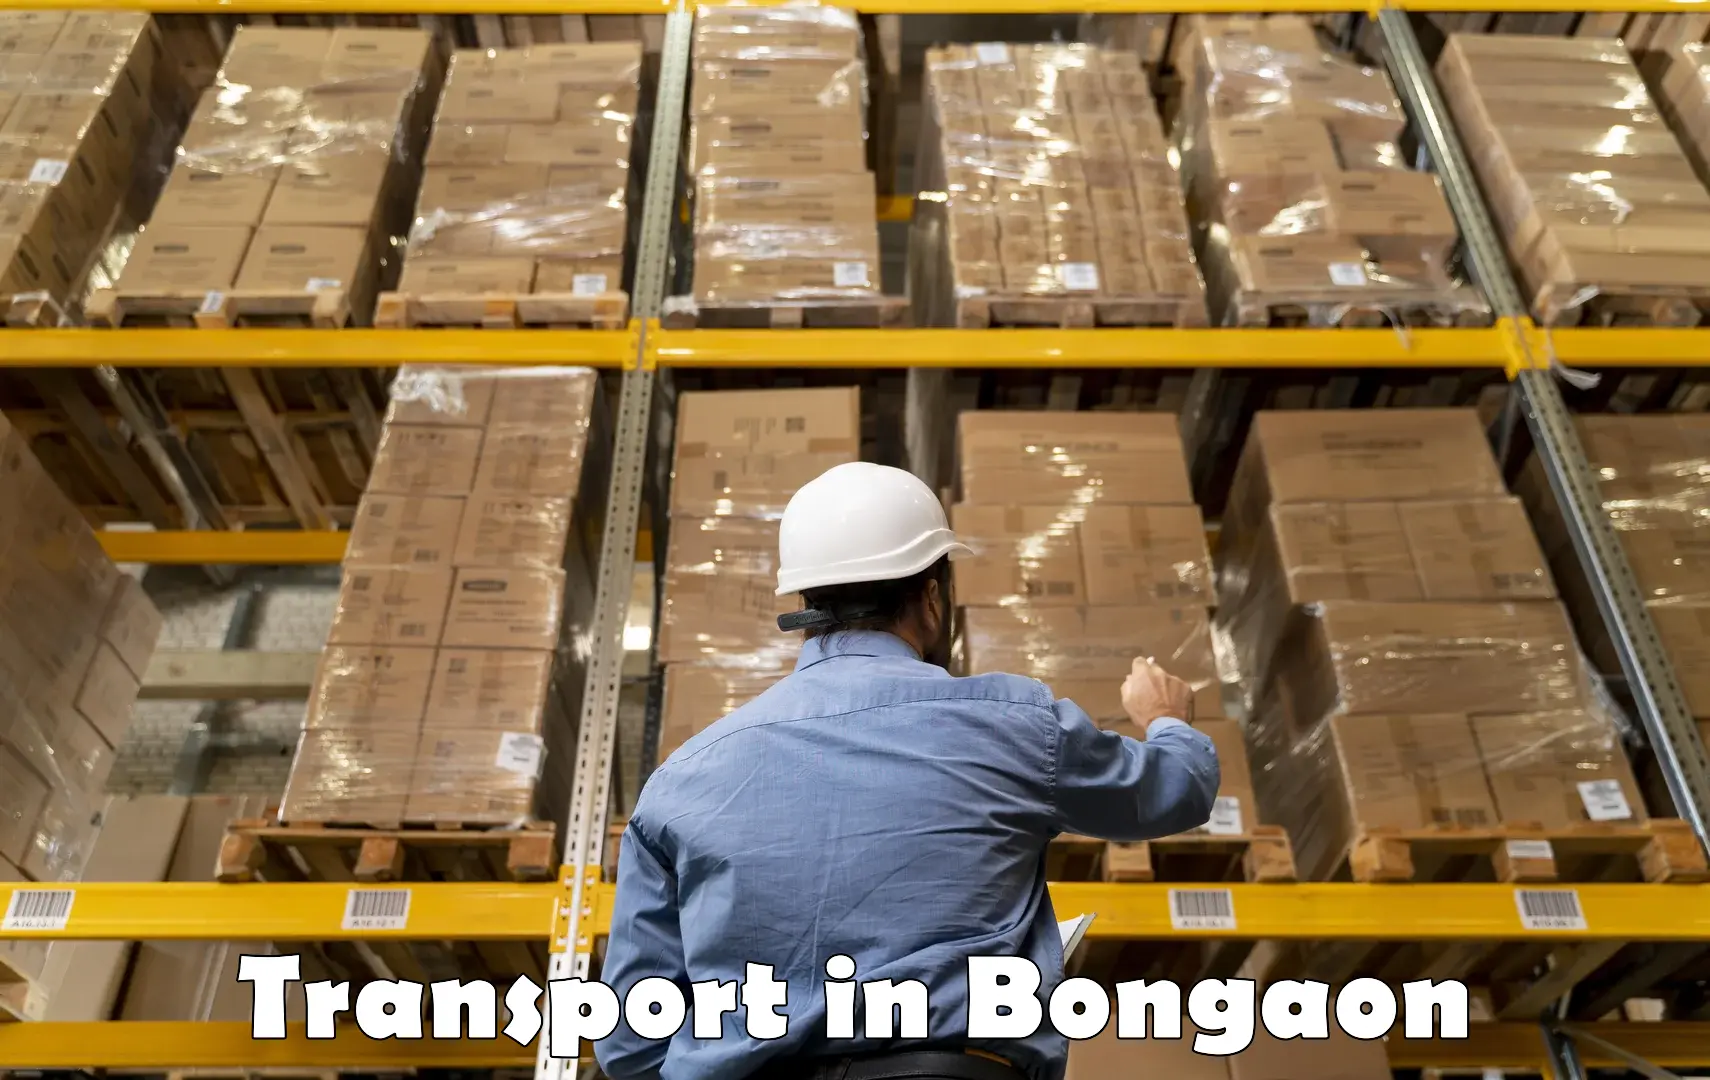 Intercity transport in Bongaon